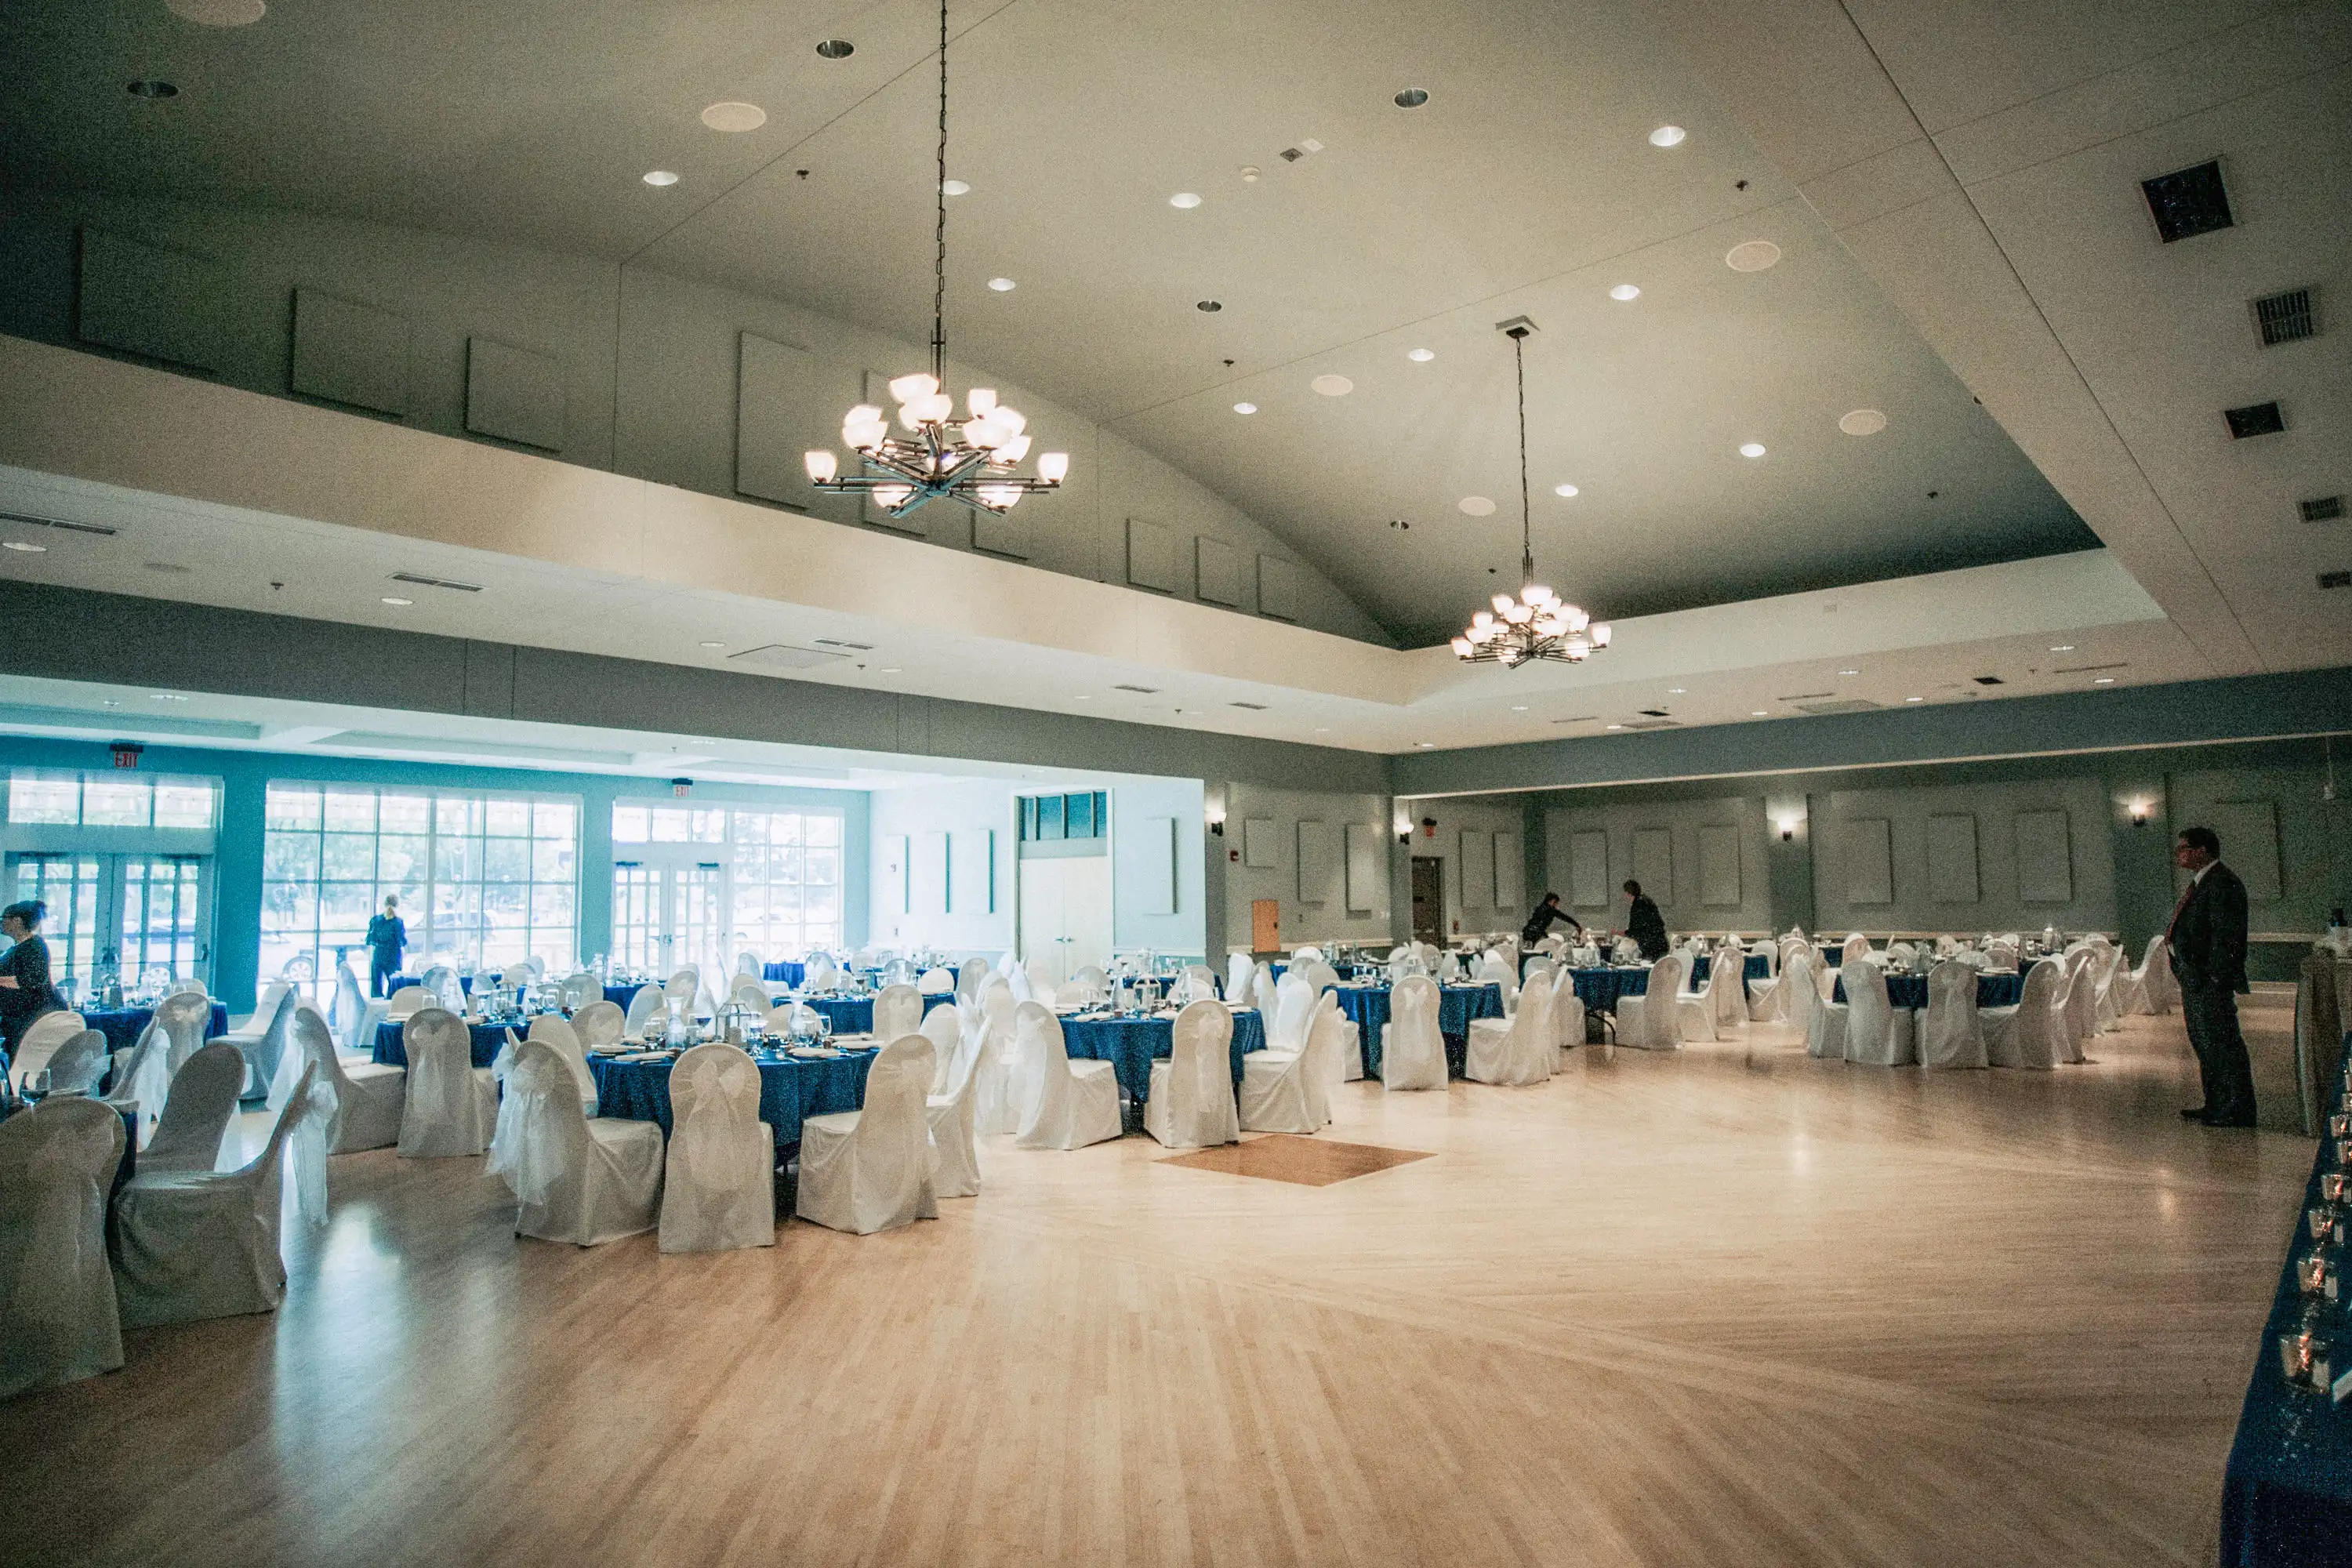 Shadowland Ballroom set up for a wedding reception